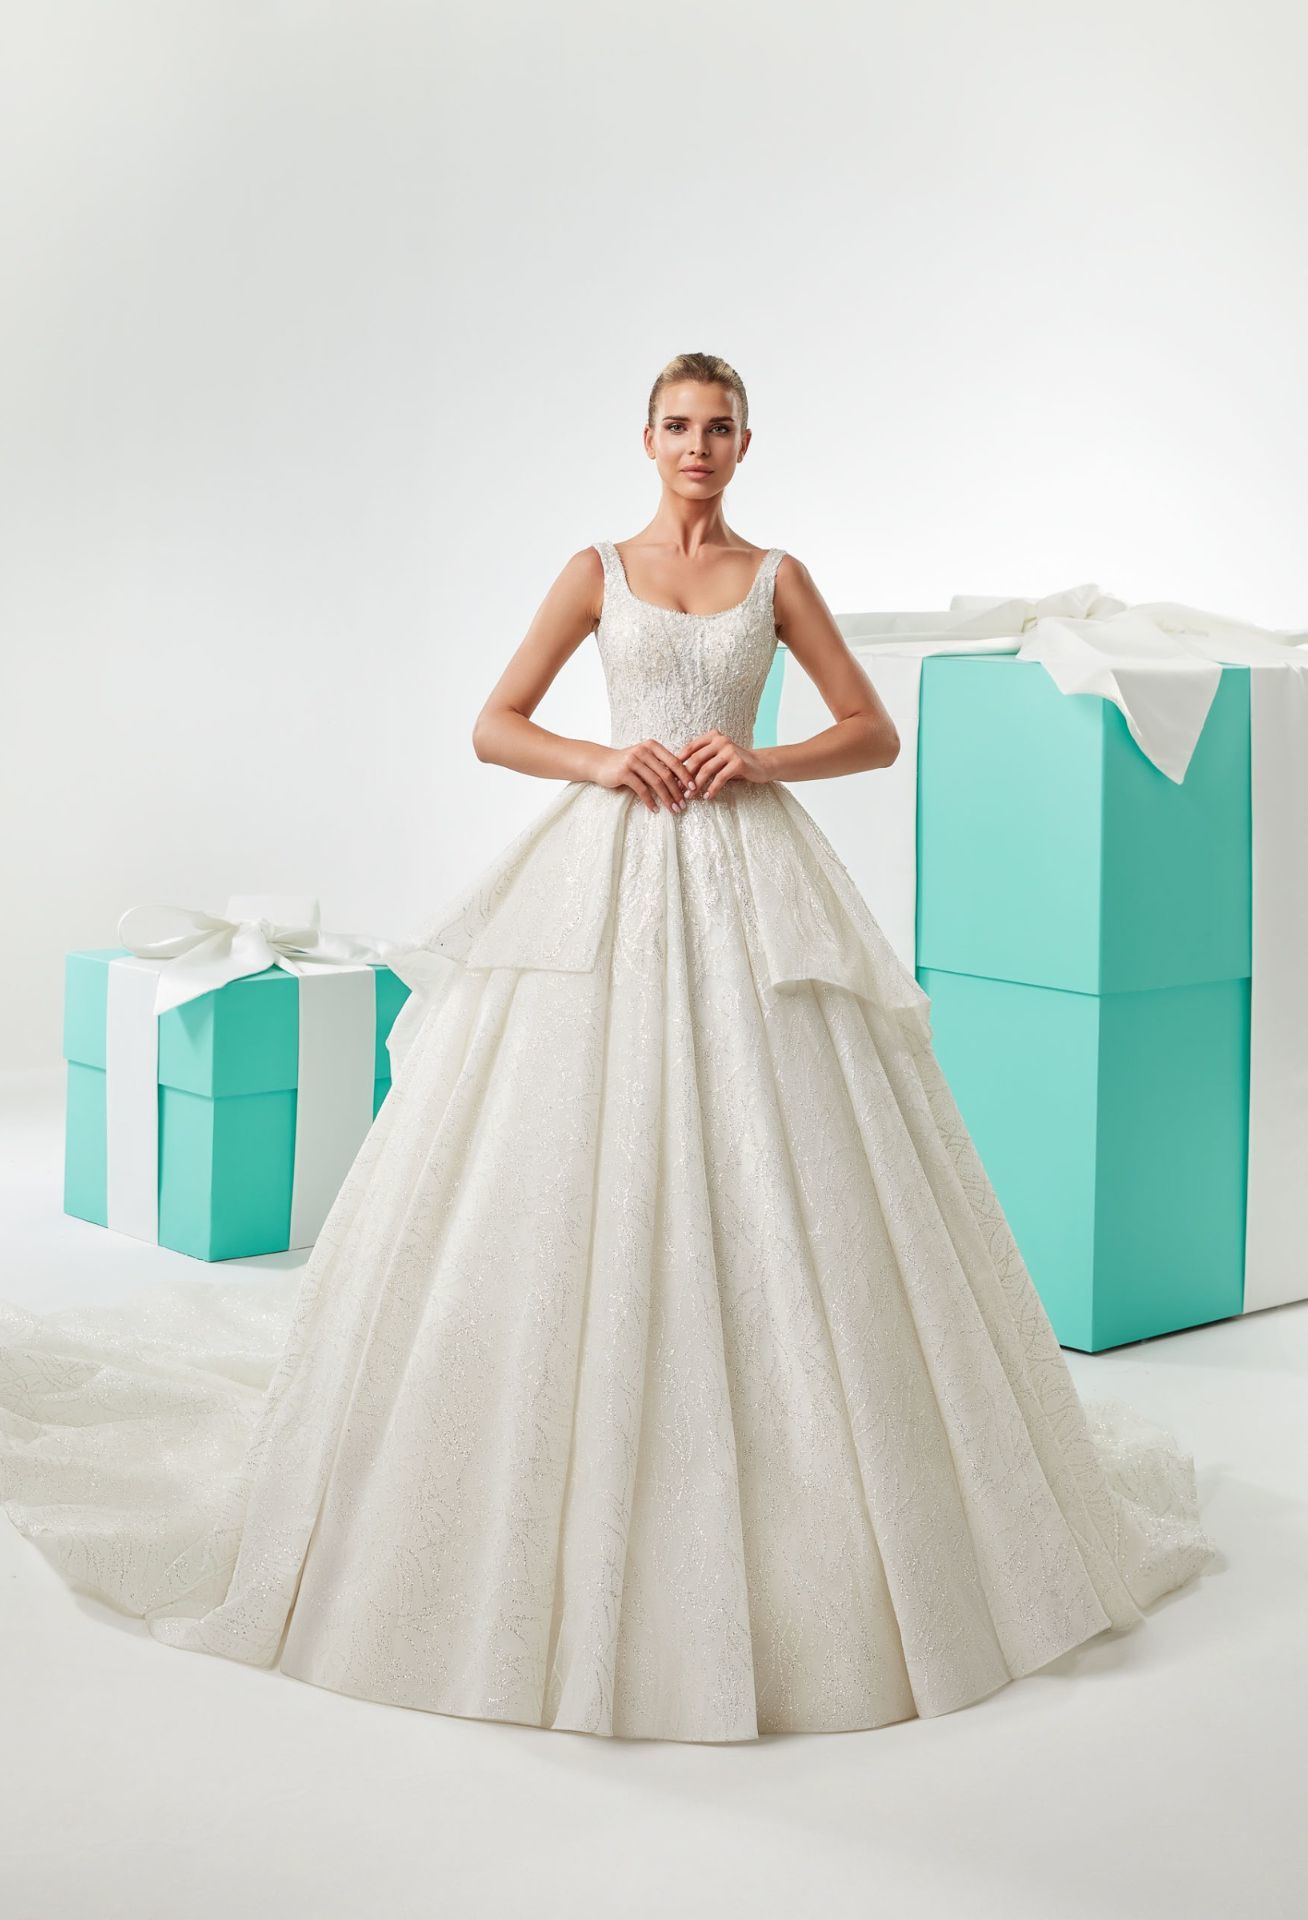 Glittery Fabric, Strap, Ball Gown Wedding Dress Model